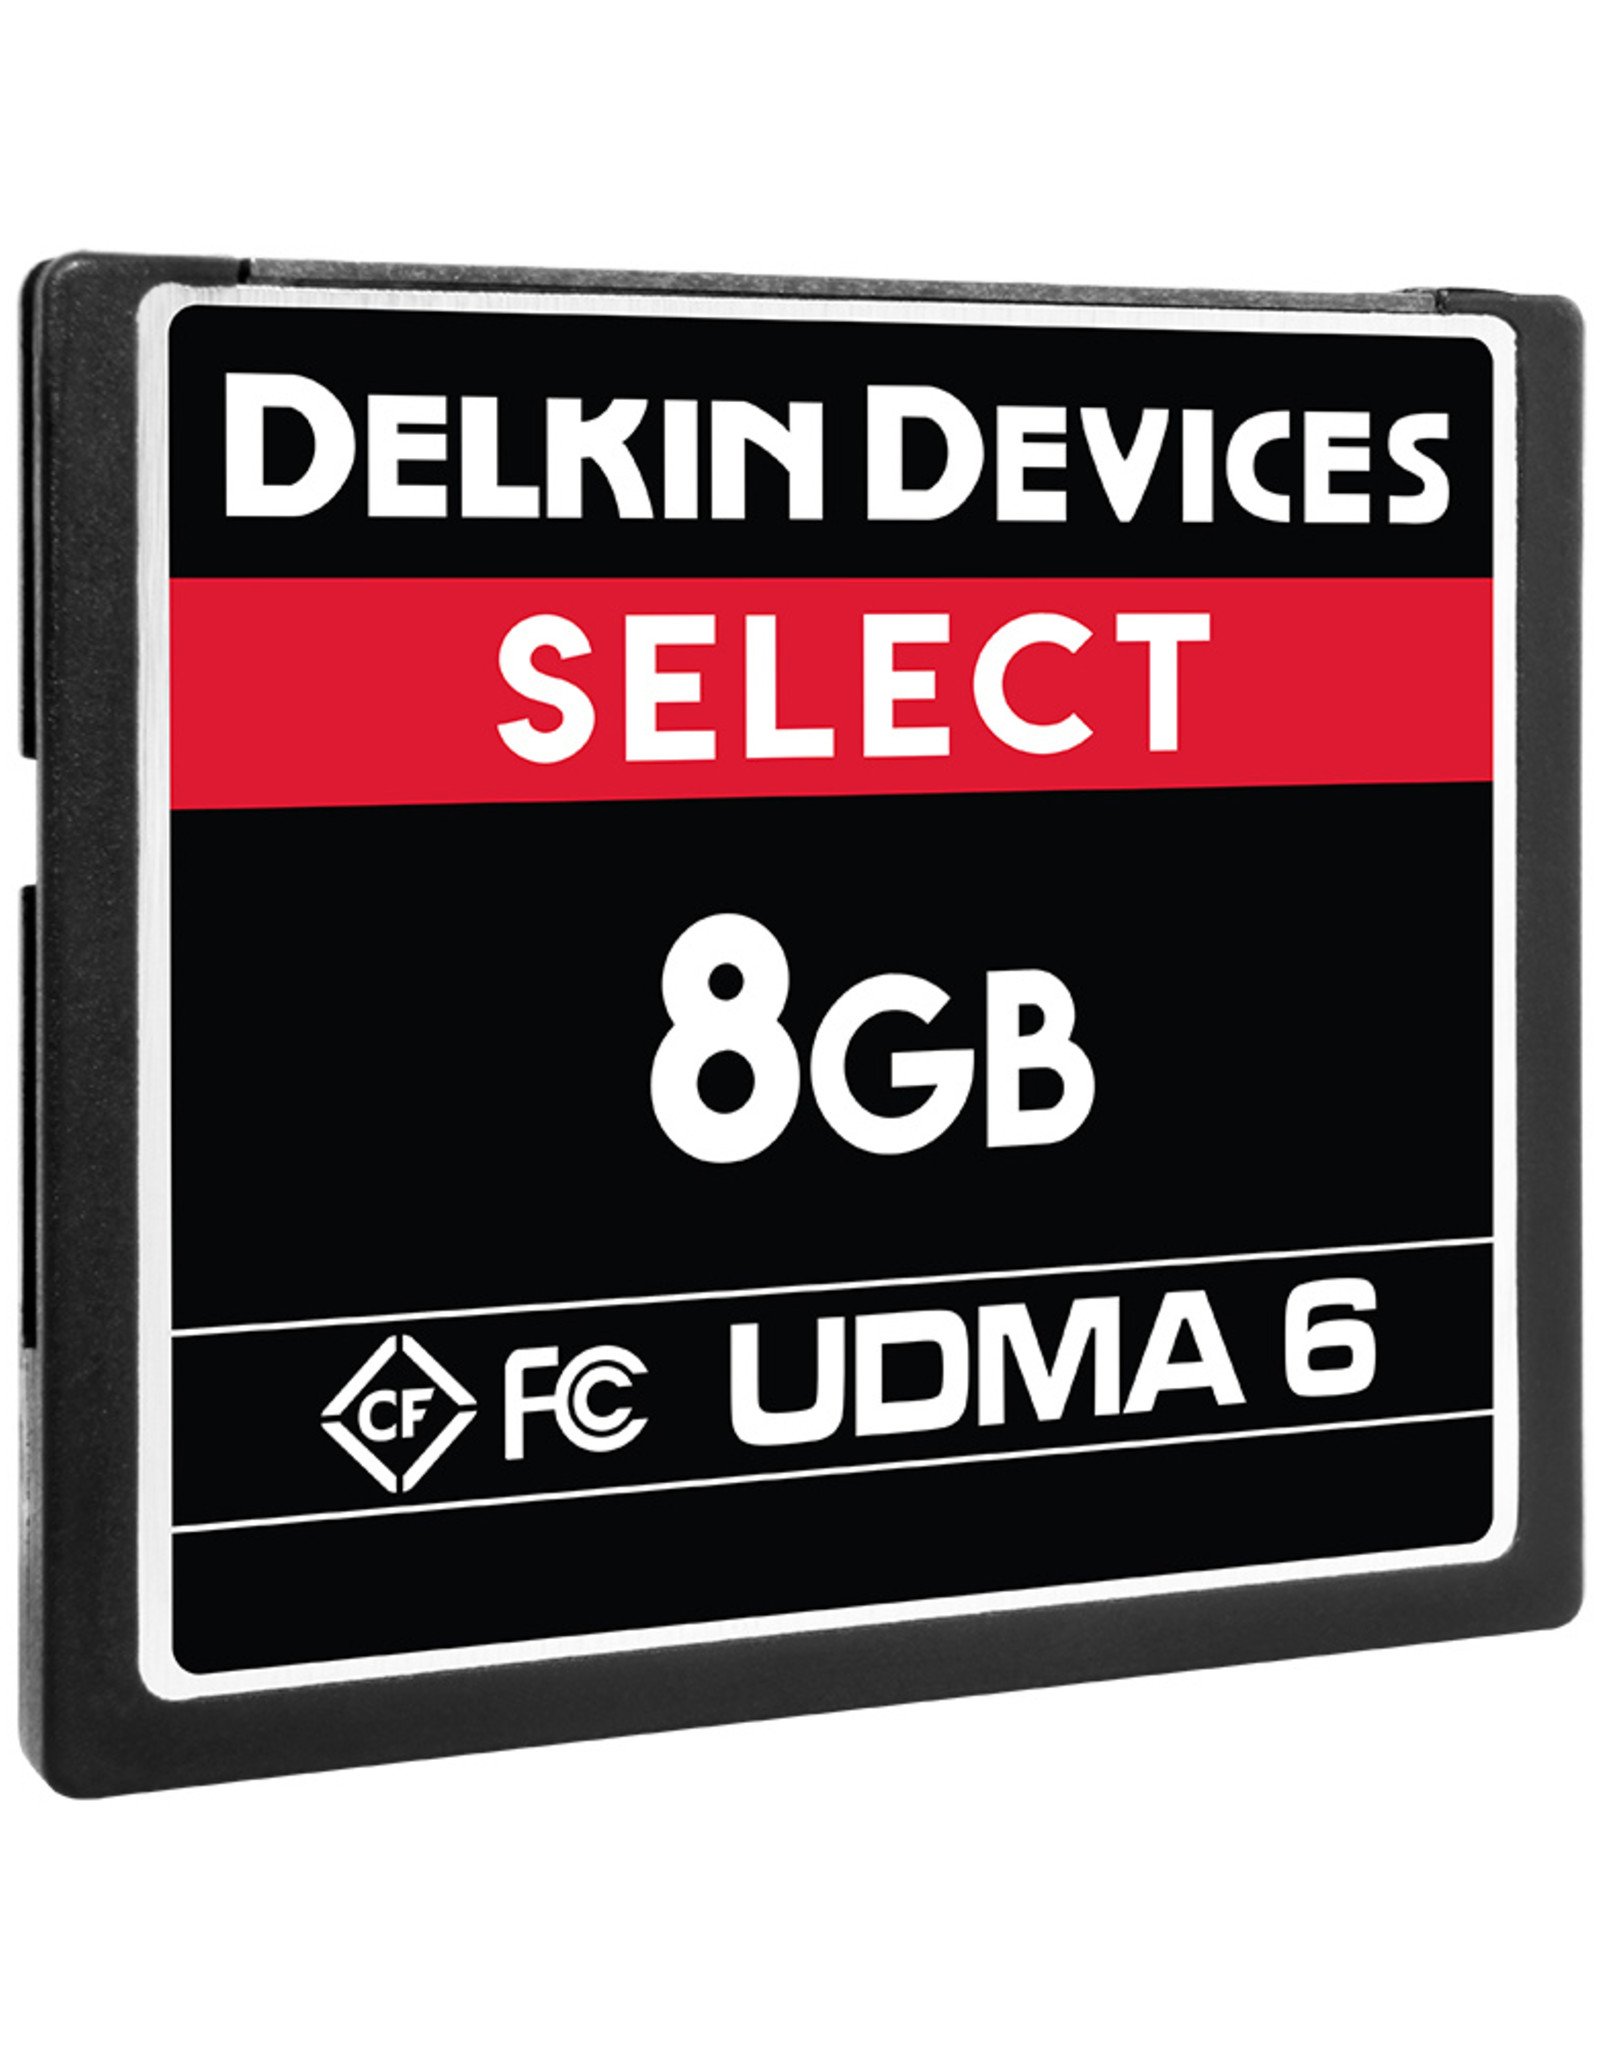 Delkin Devices Delkin Select CF UDMA 6